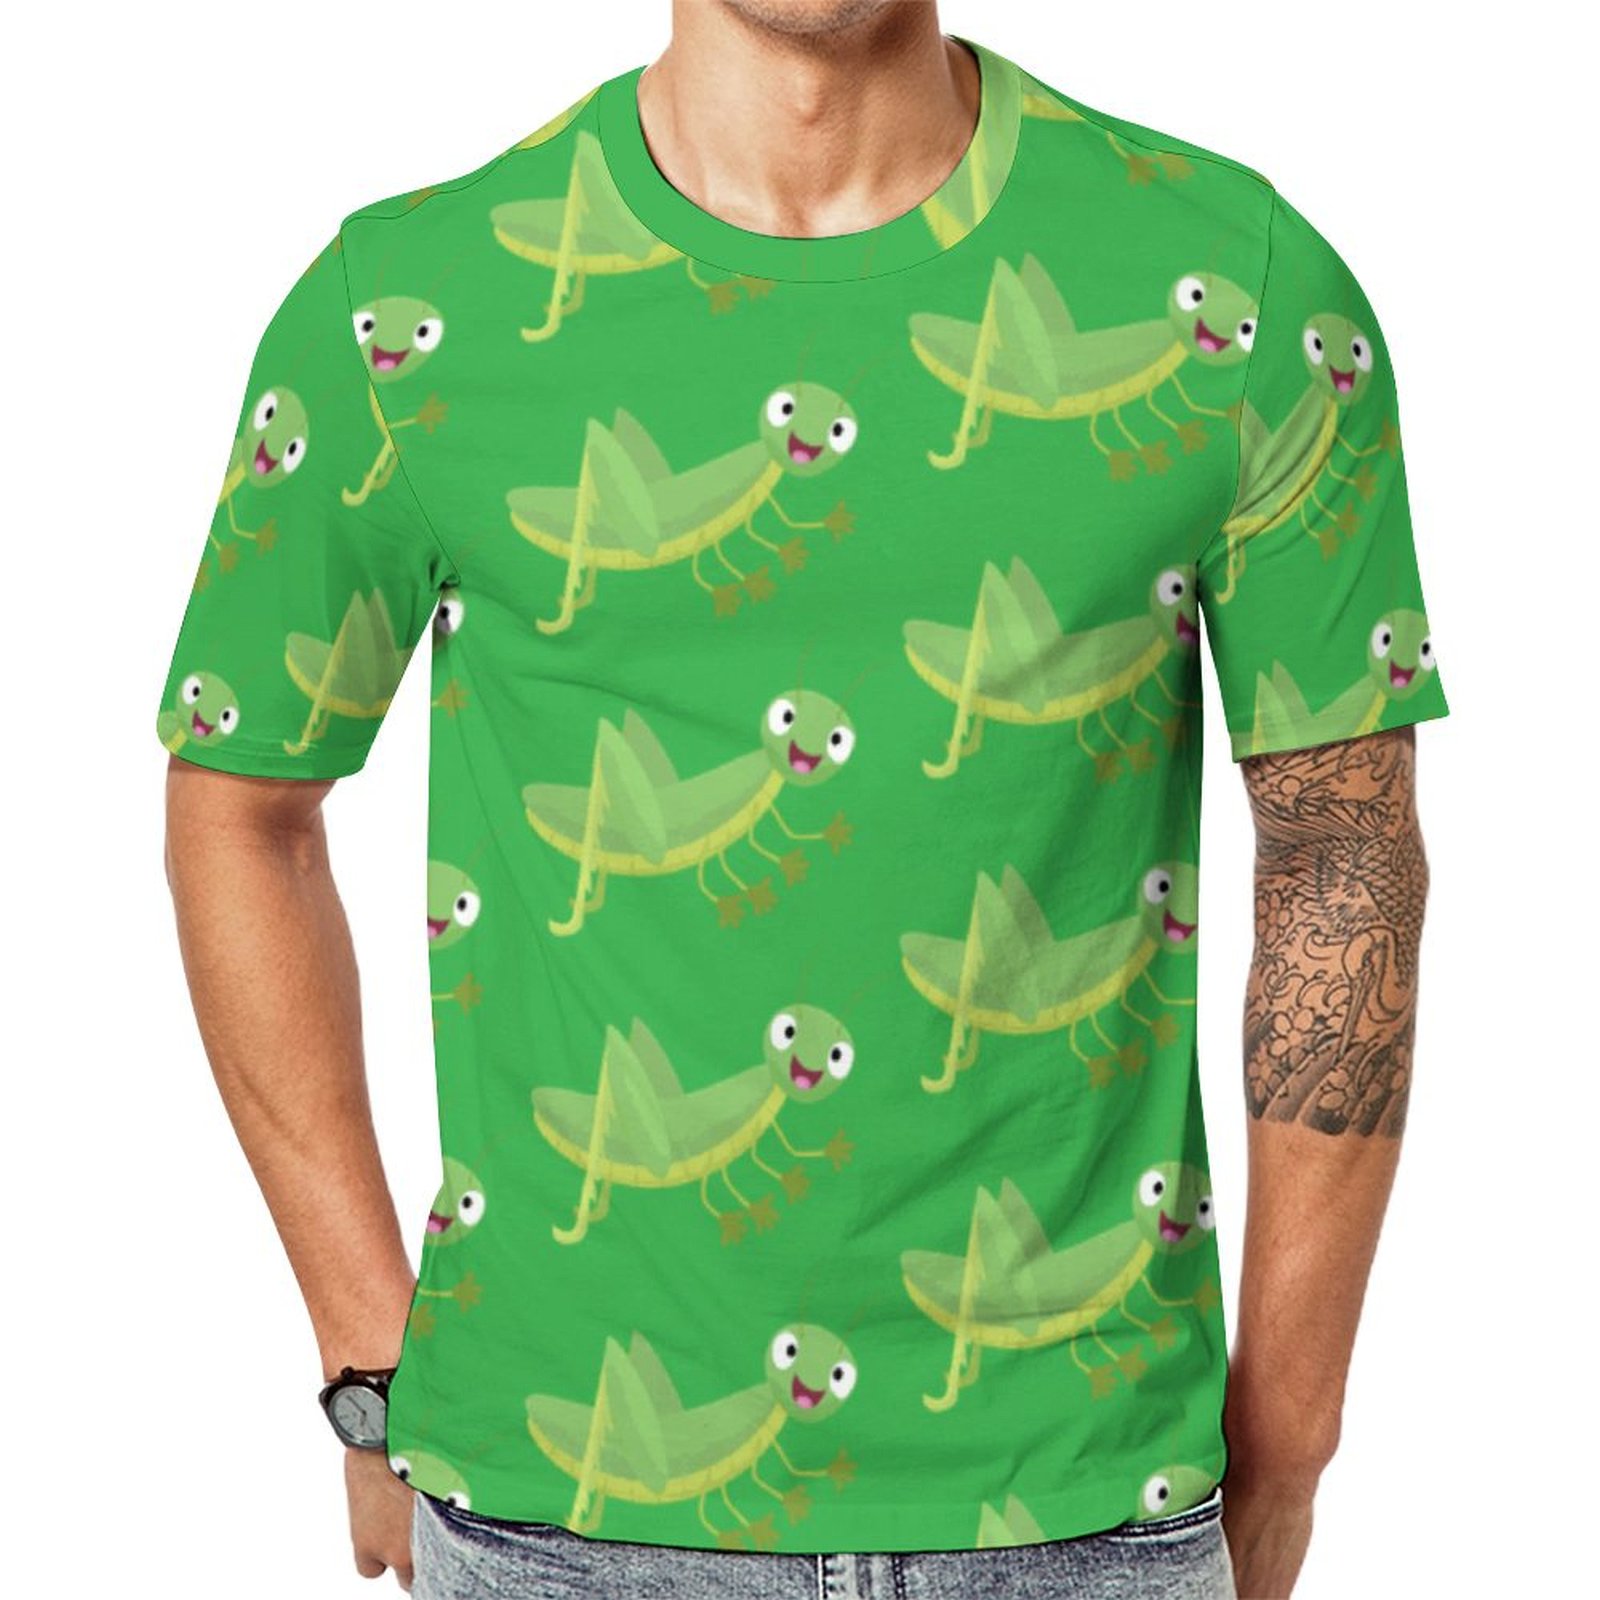 Cute Green Happy Grasshopper Cartoon Short Sleeve Print Unisex Tshirt Summer Casual Tees for Men and Women Coolcoshirts